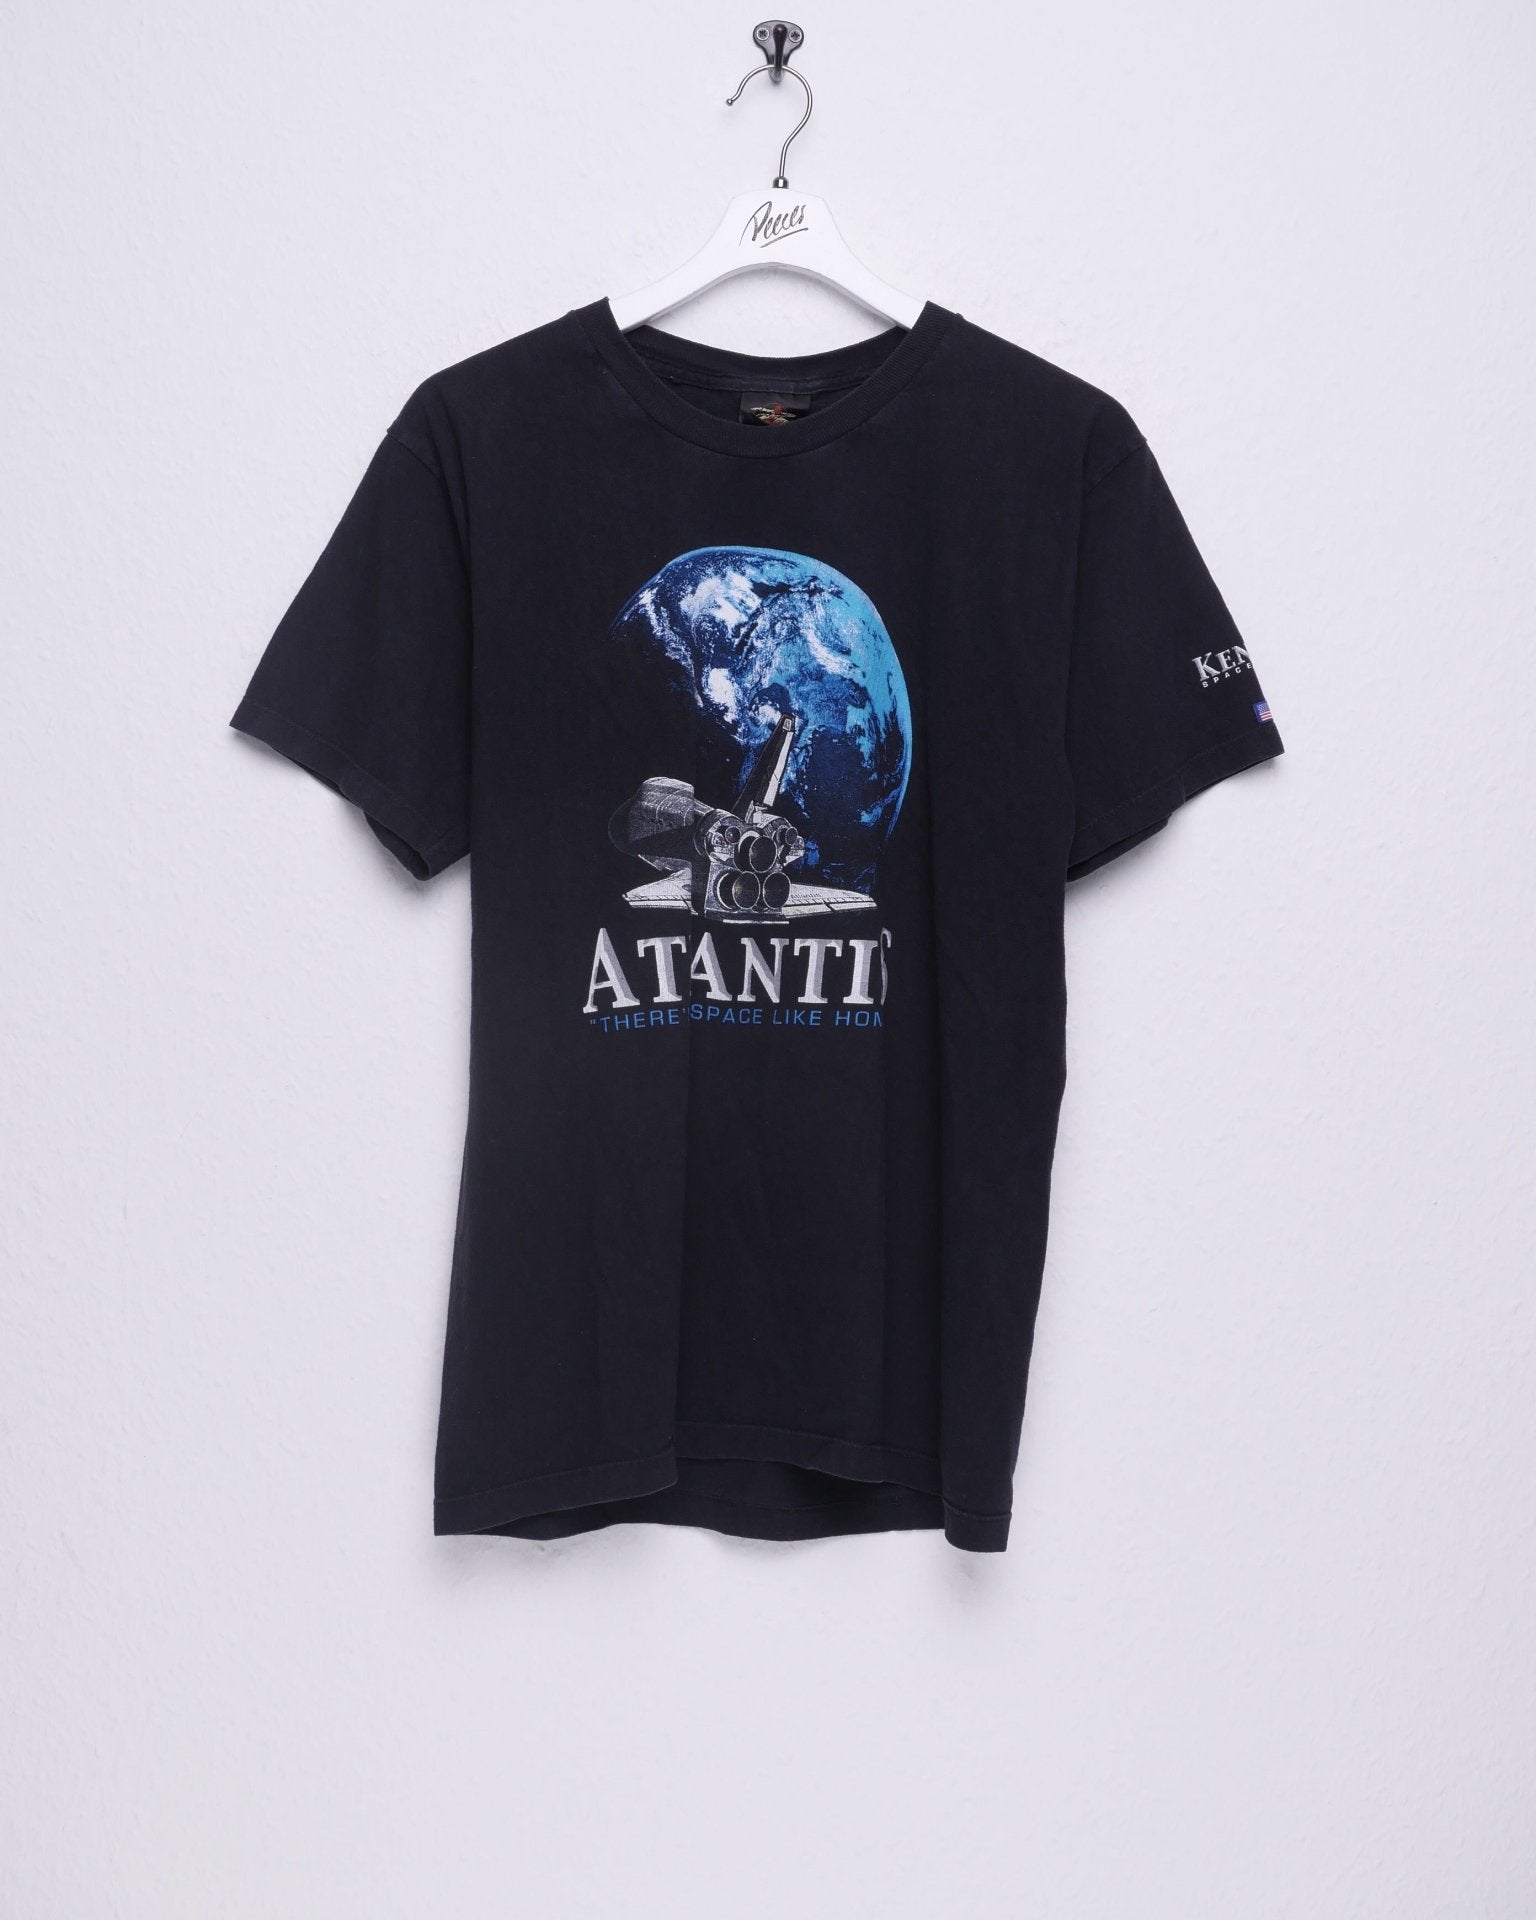 Atlantis printed Graphic black Shirt - Peeces